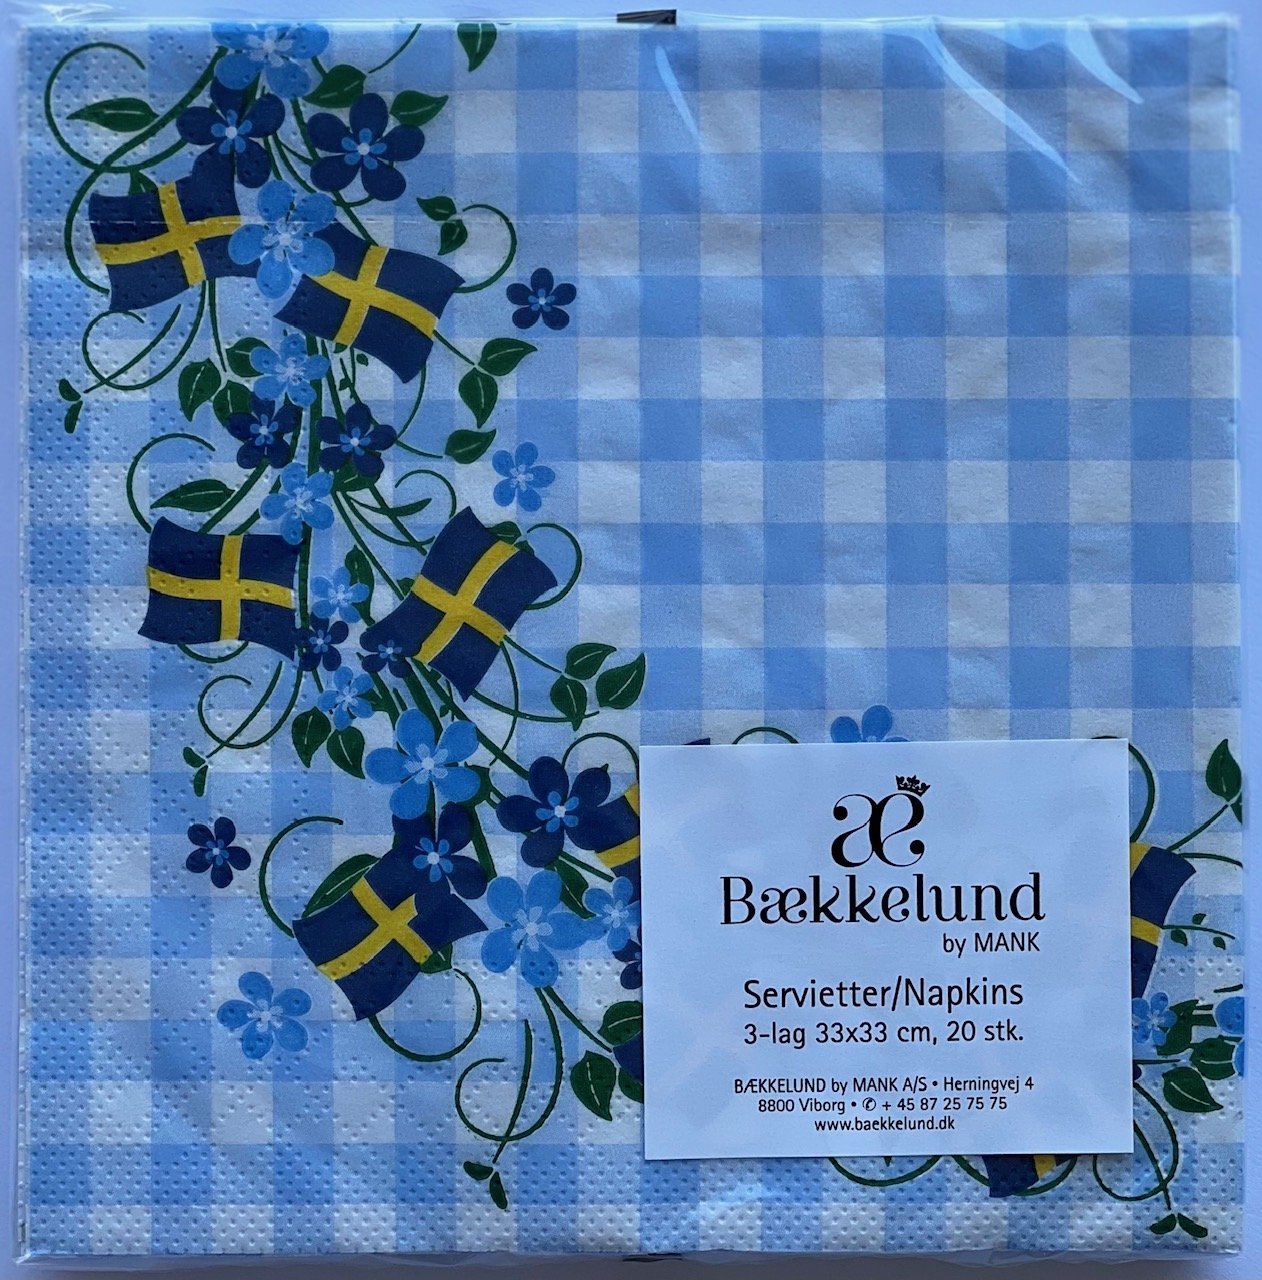 Napkins with Swedish flag